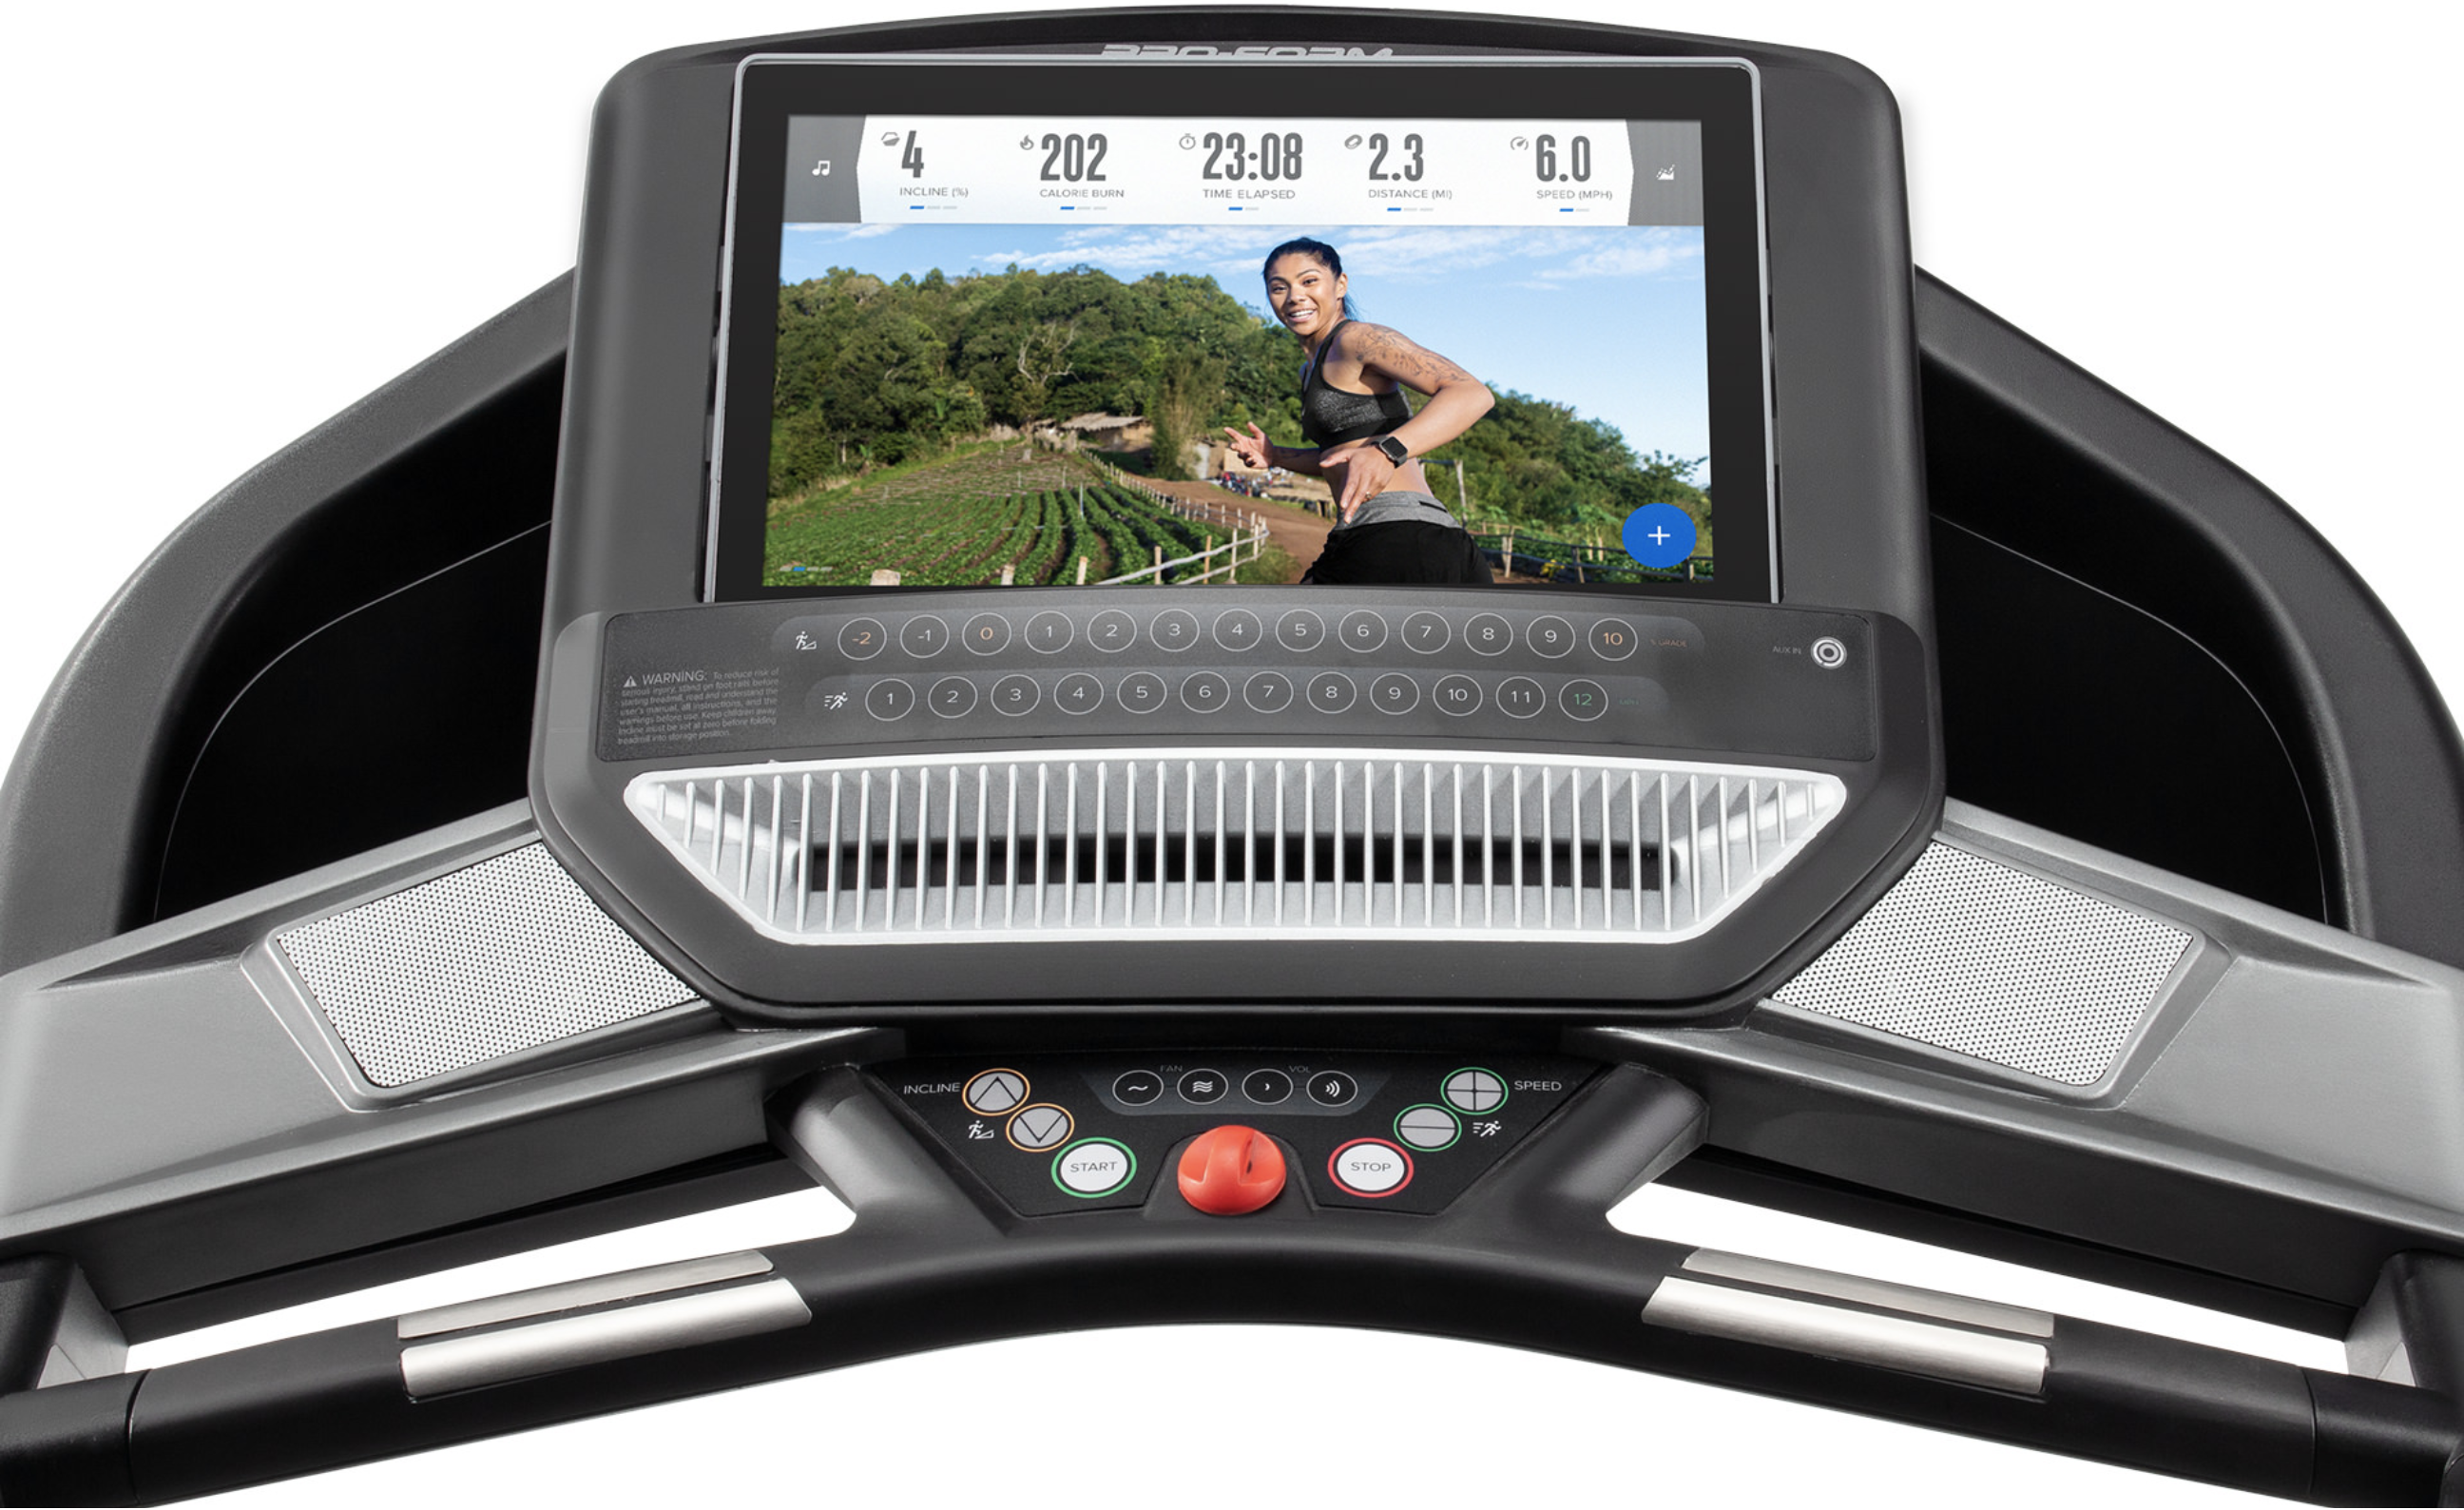 large screen on the proform treadmill